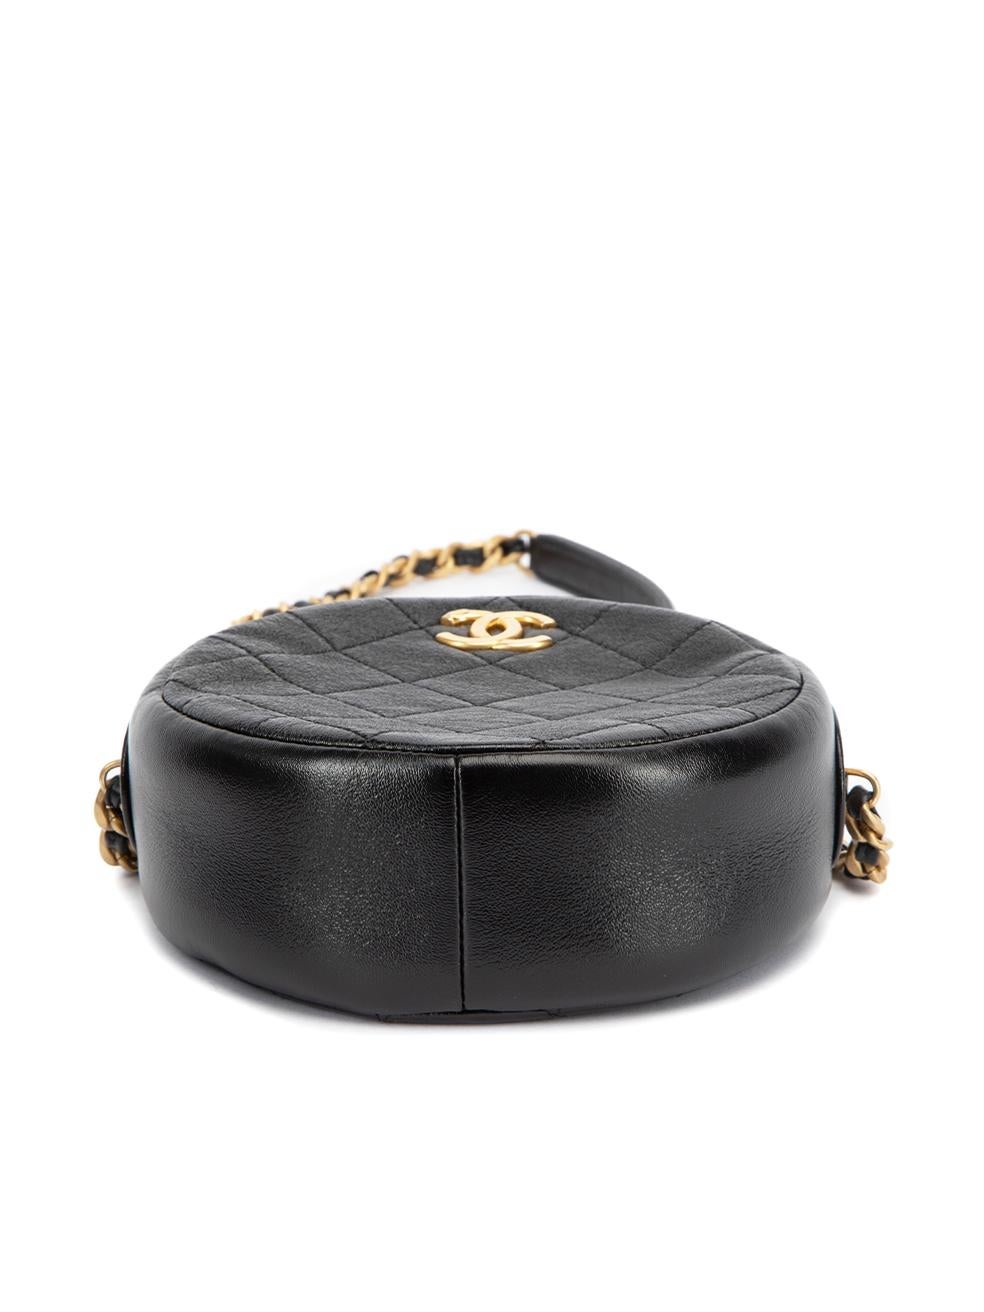 Chanel Women's Black Leather Round Chain Clutch 1